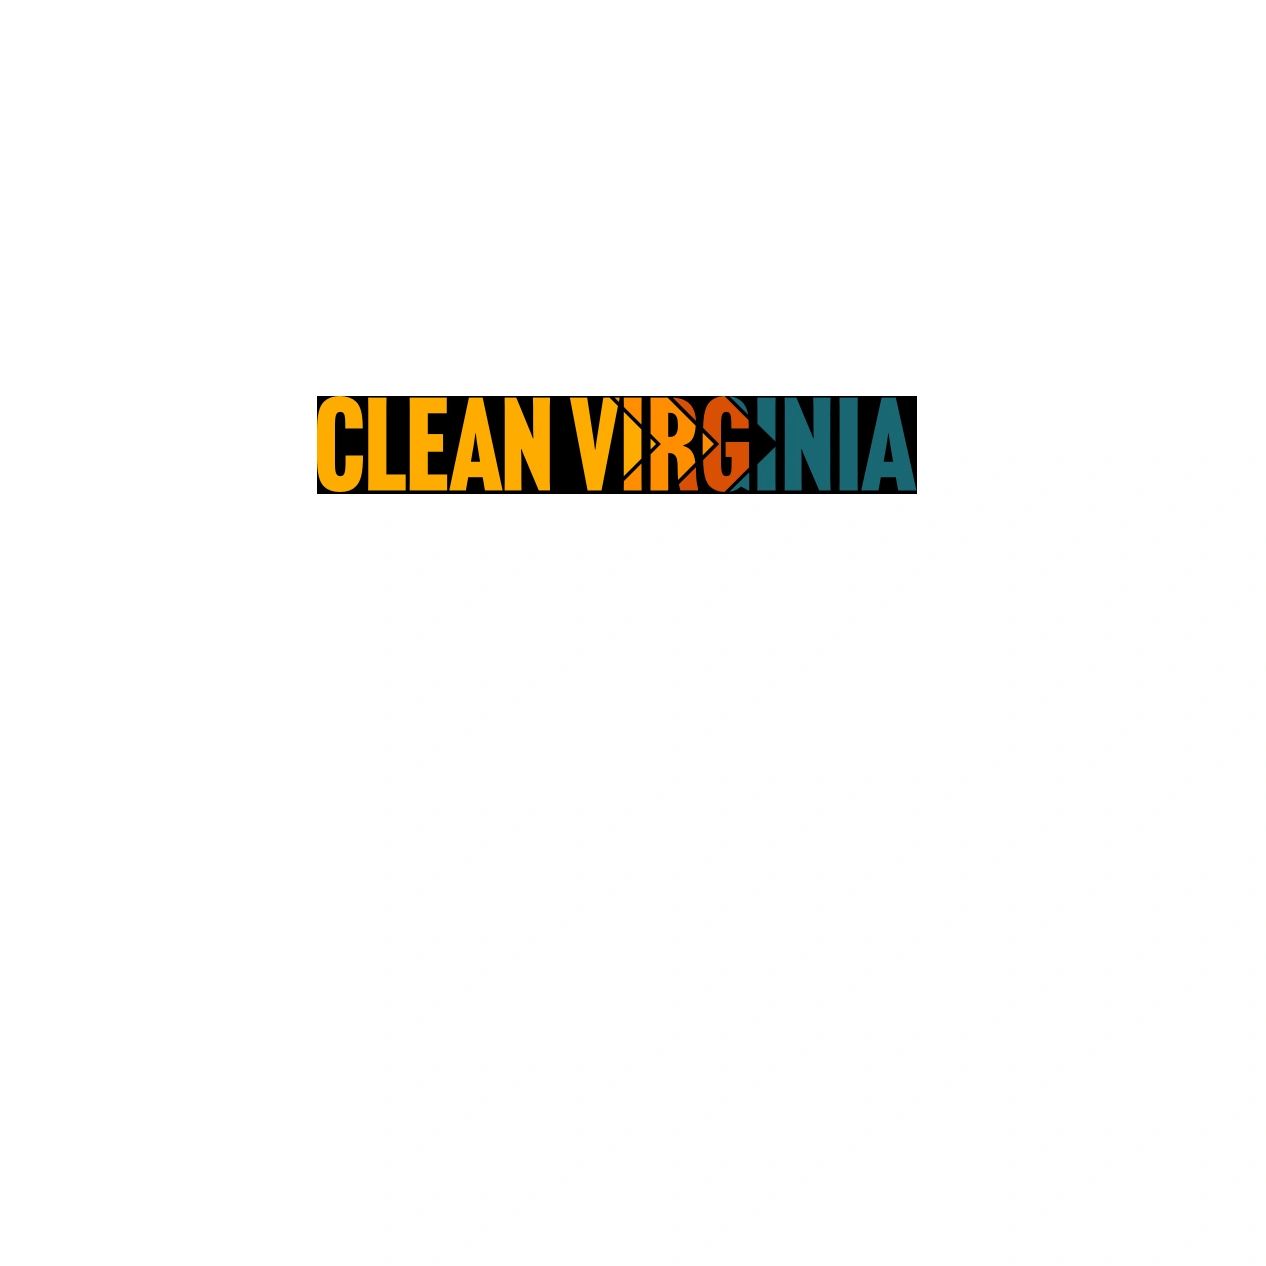 Clean Virginia